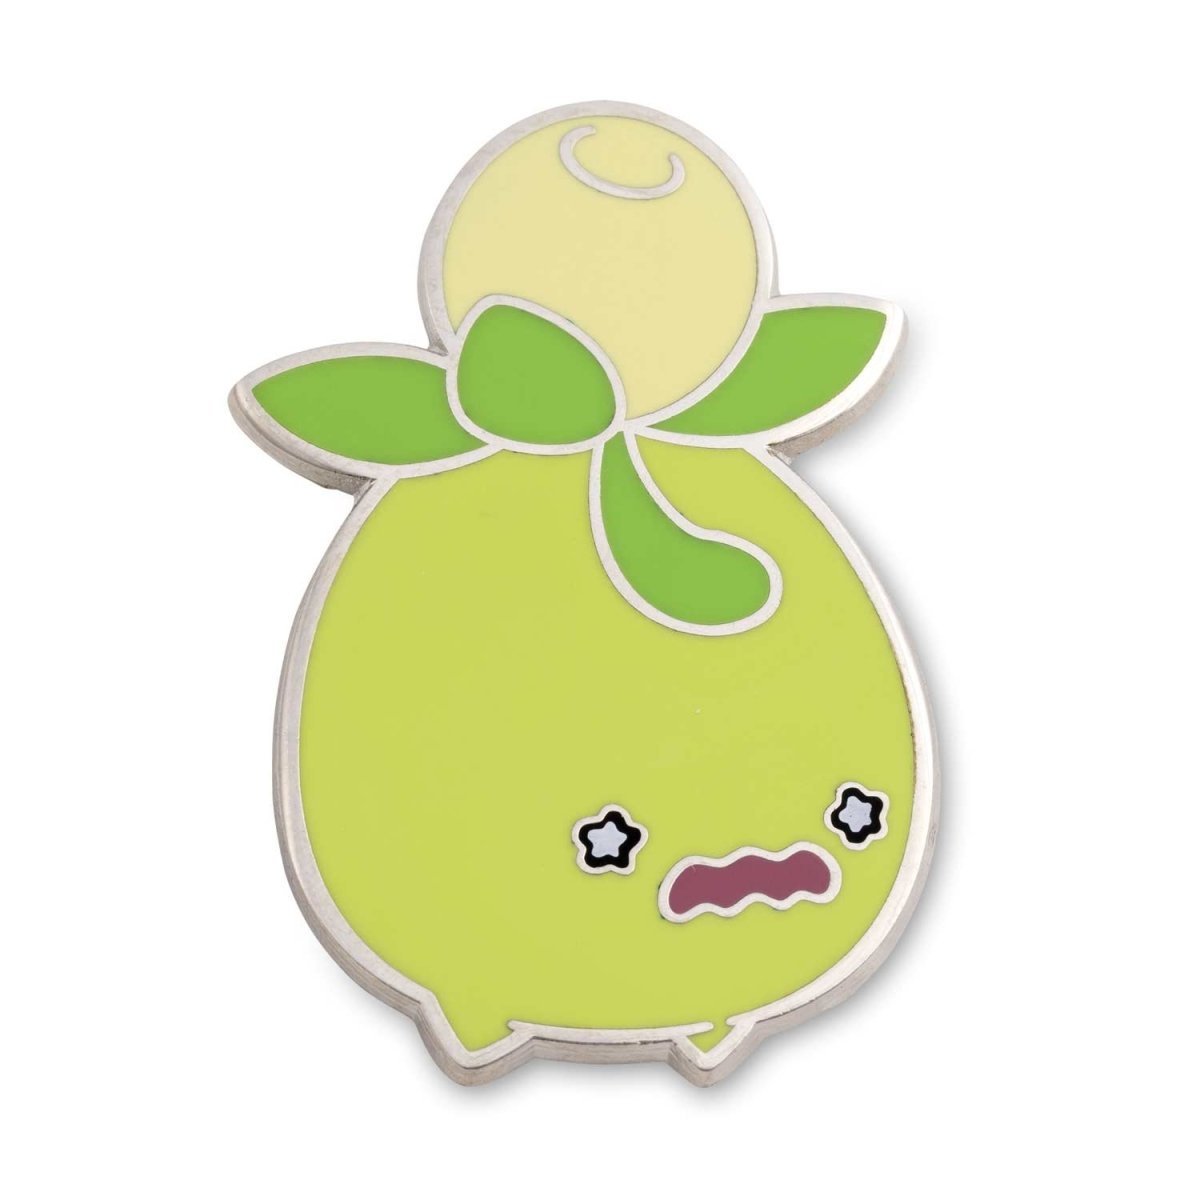 Lechonk Pokémon Pins (3-Pack)